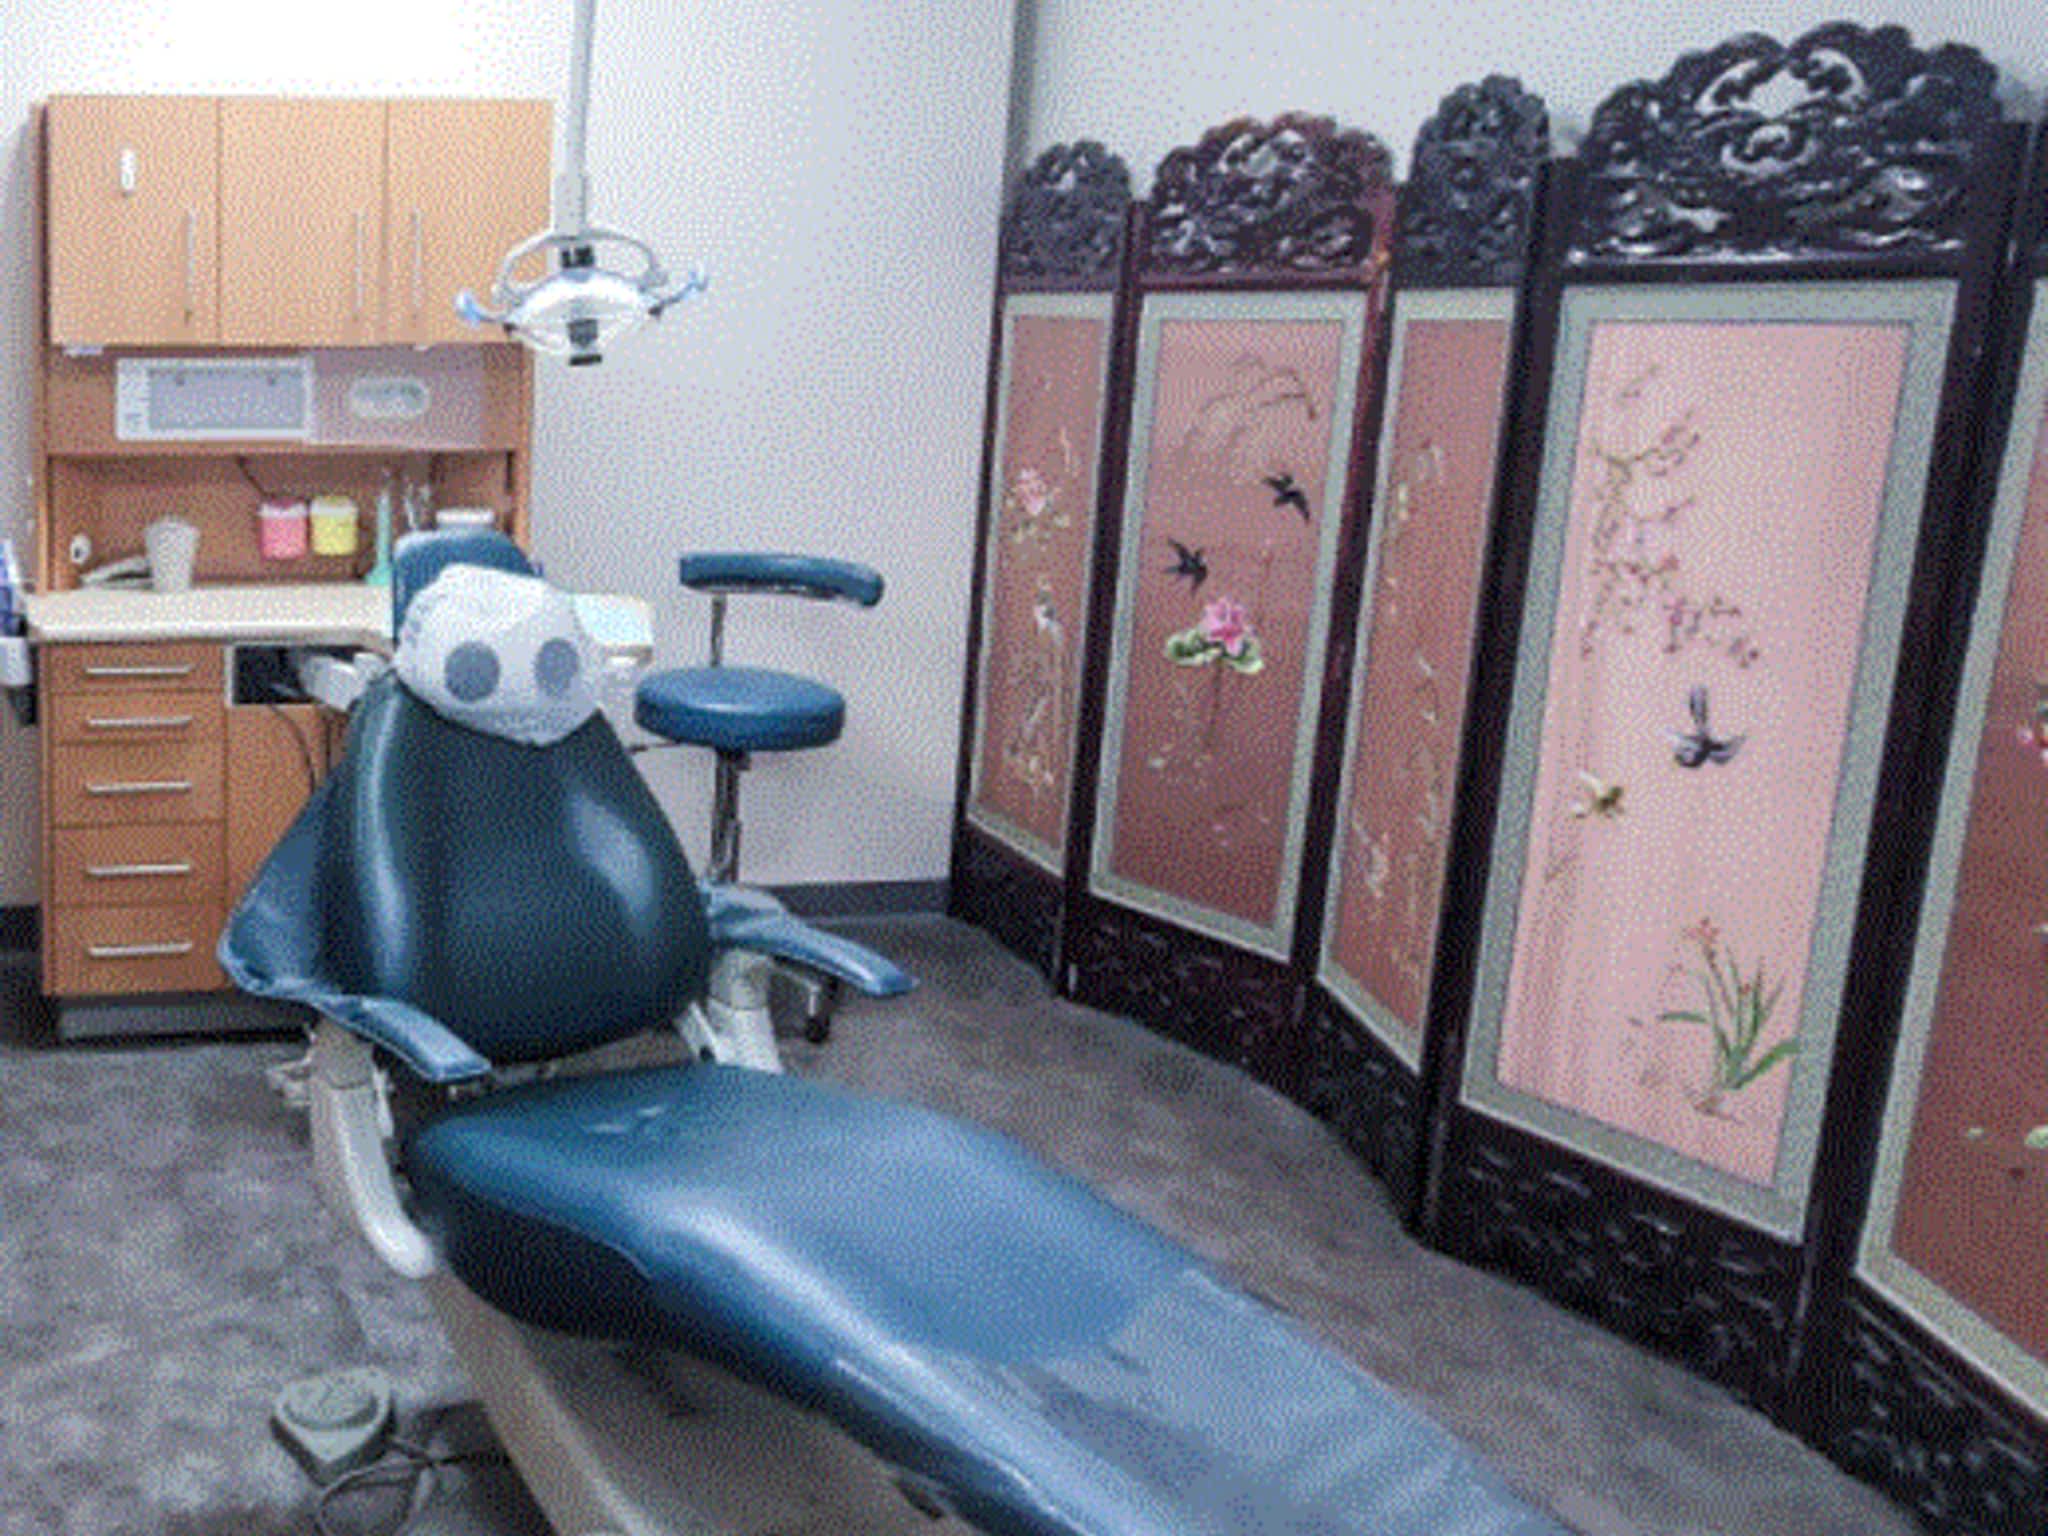 photo Lighthouse Dental and Implant Centre- Dr M K Pillai Inc - Family Dentistry